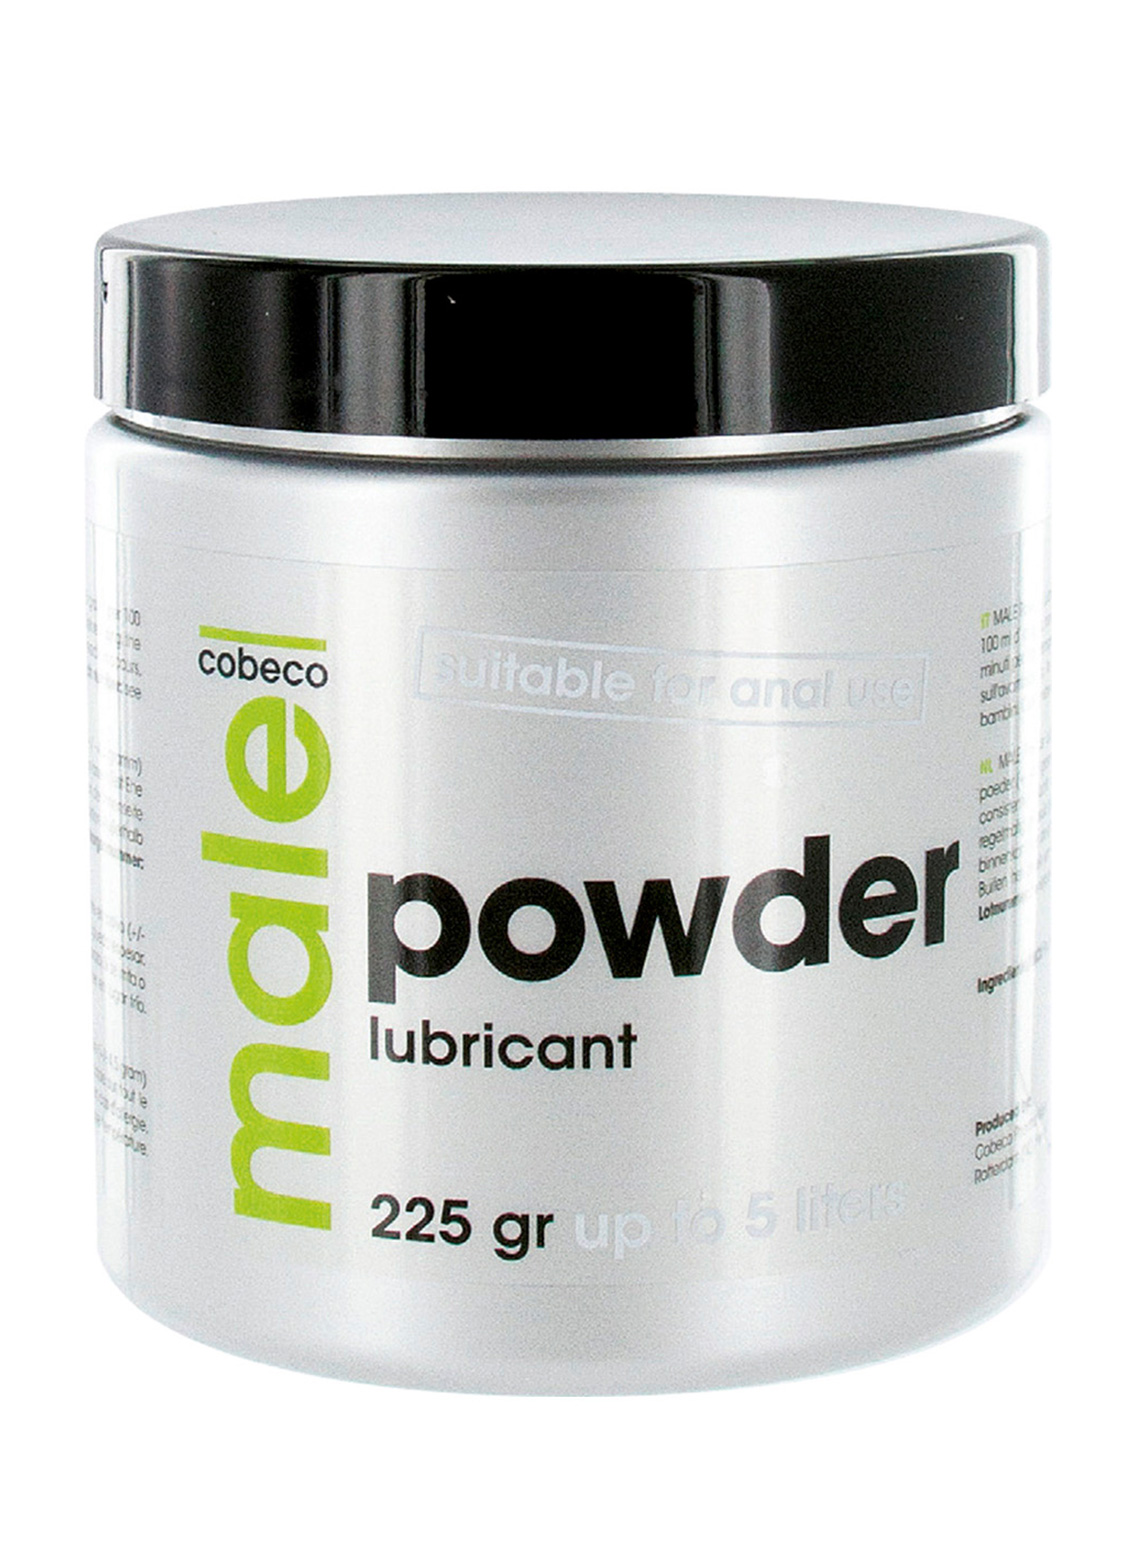 Cobeco Male Powder Lubricant 225g